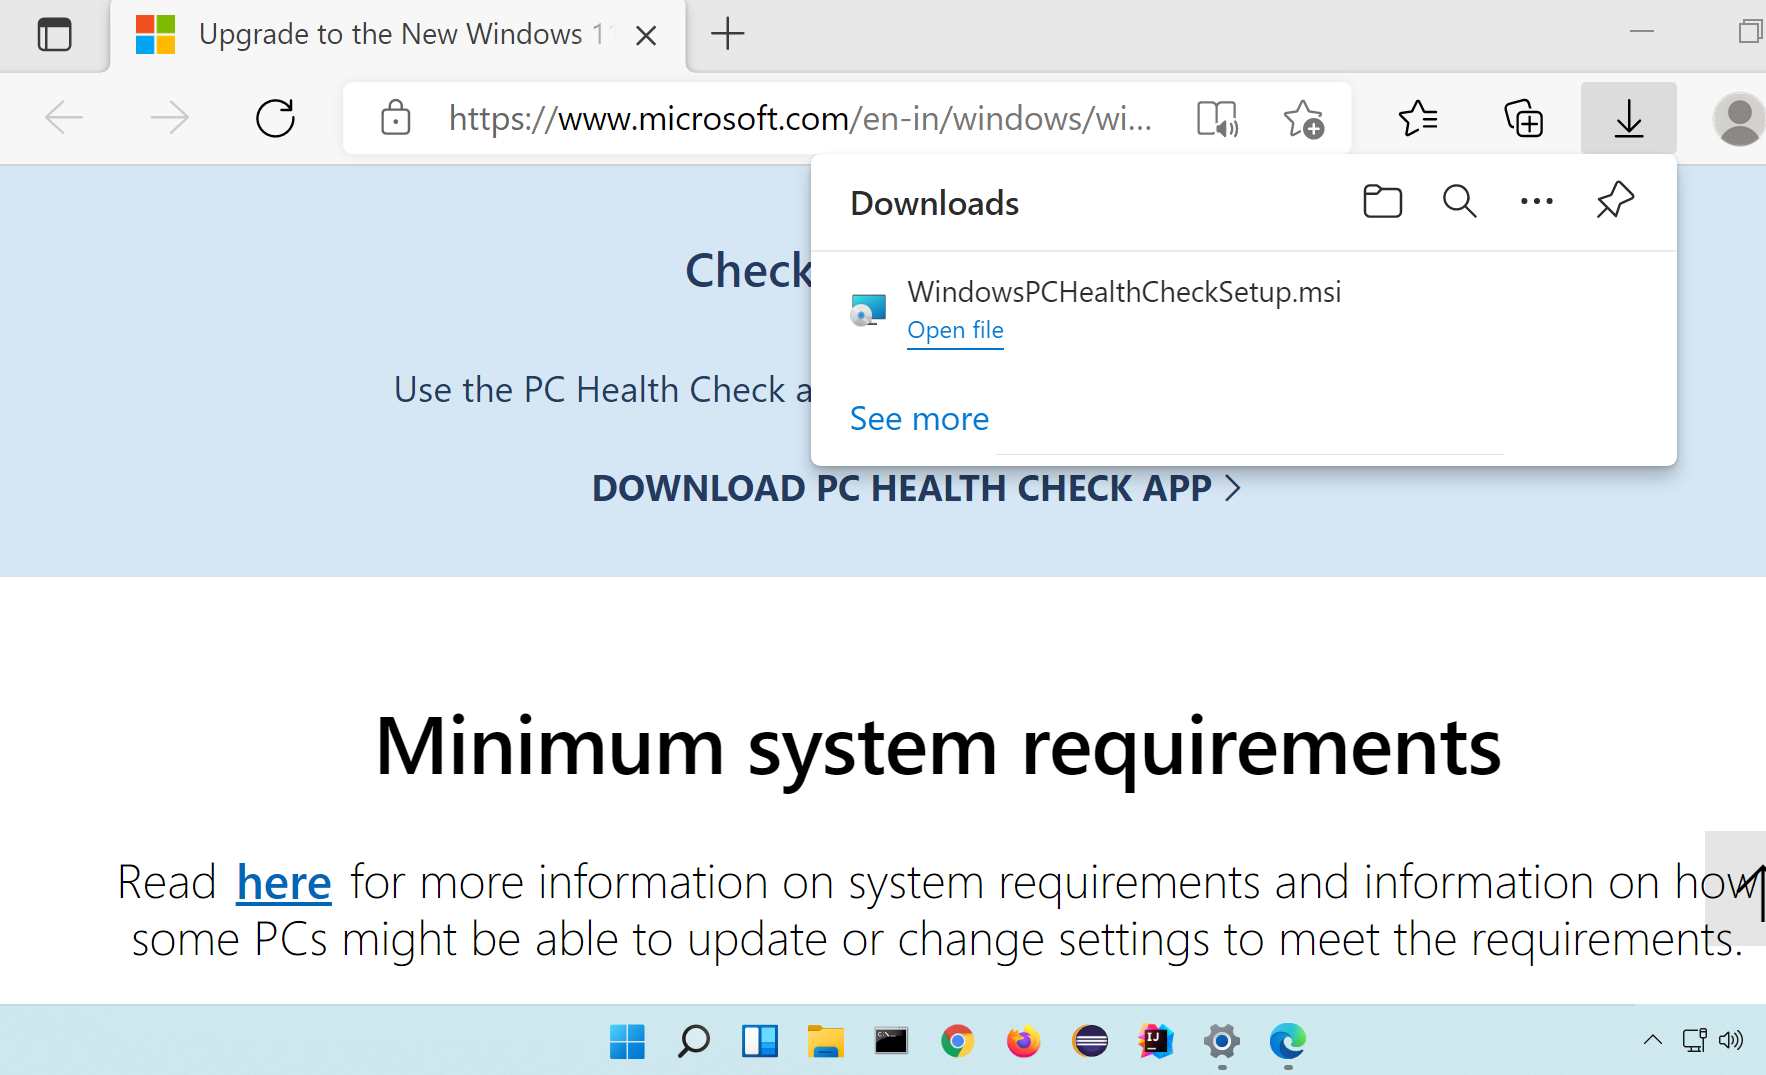 Windows PC Health Check Tool